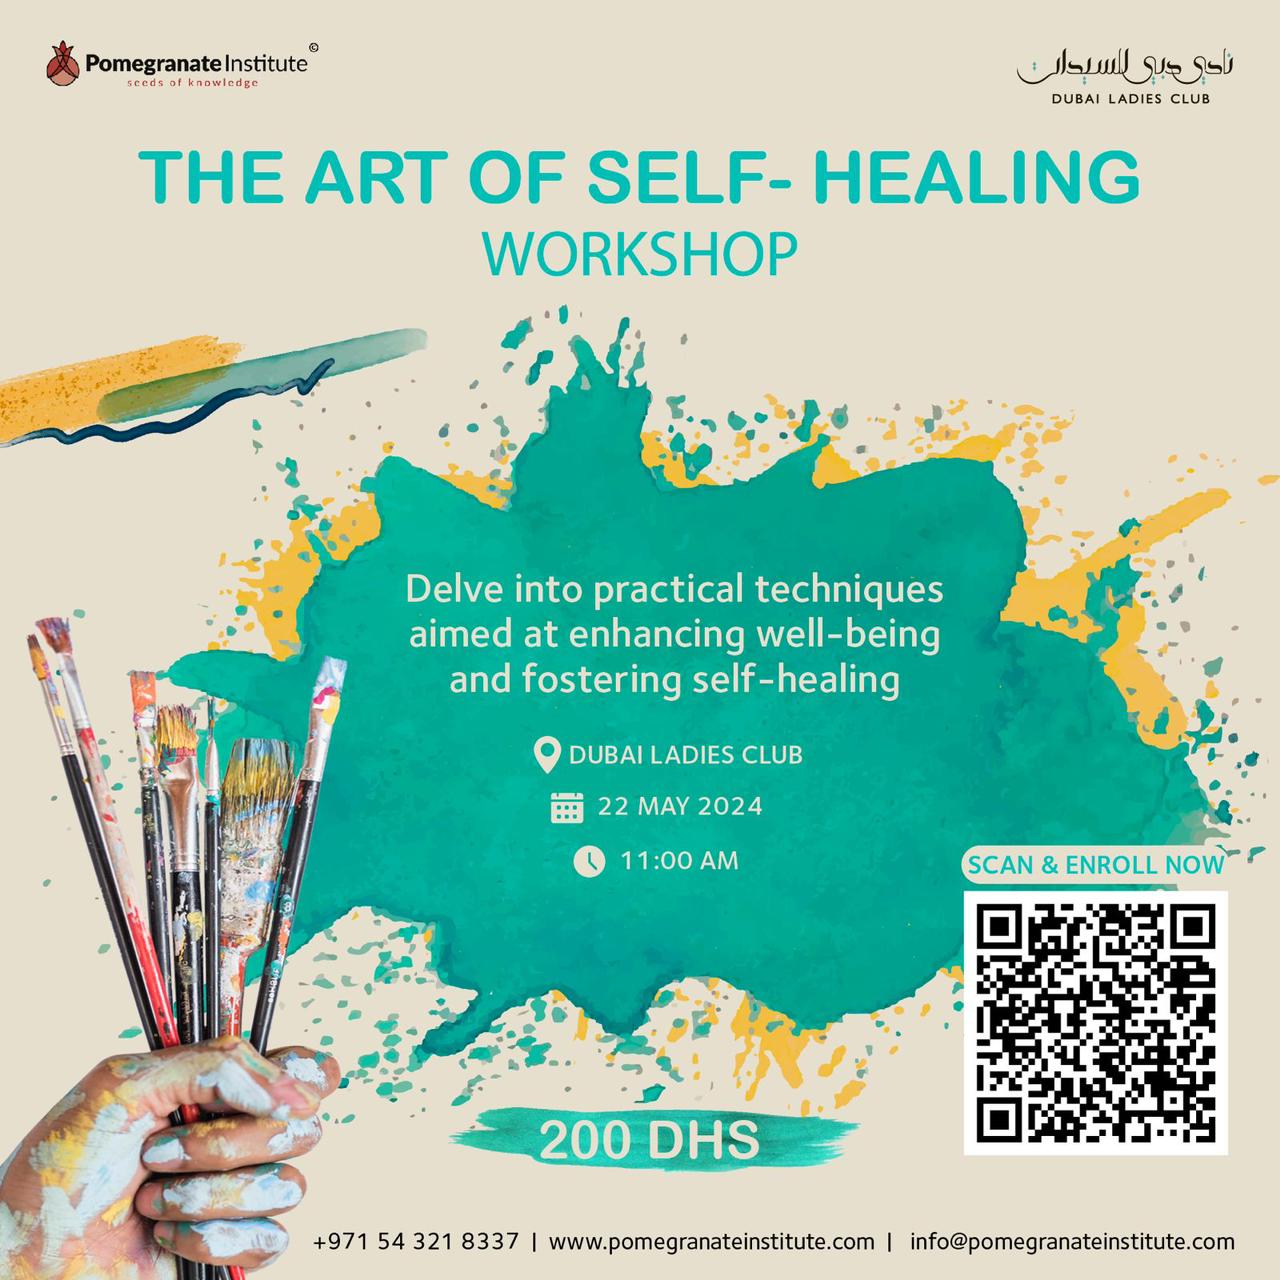 The Art of Self-Healing Workshop